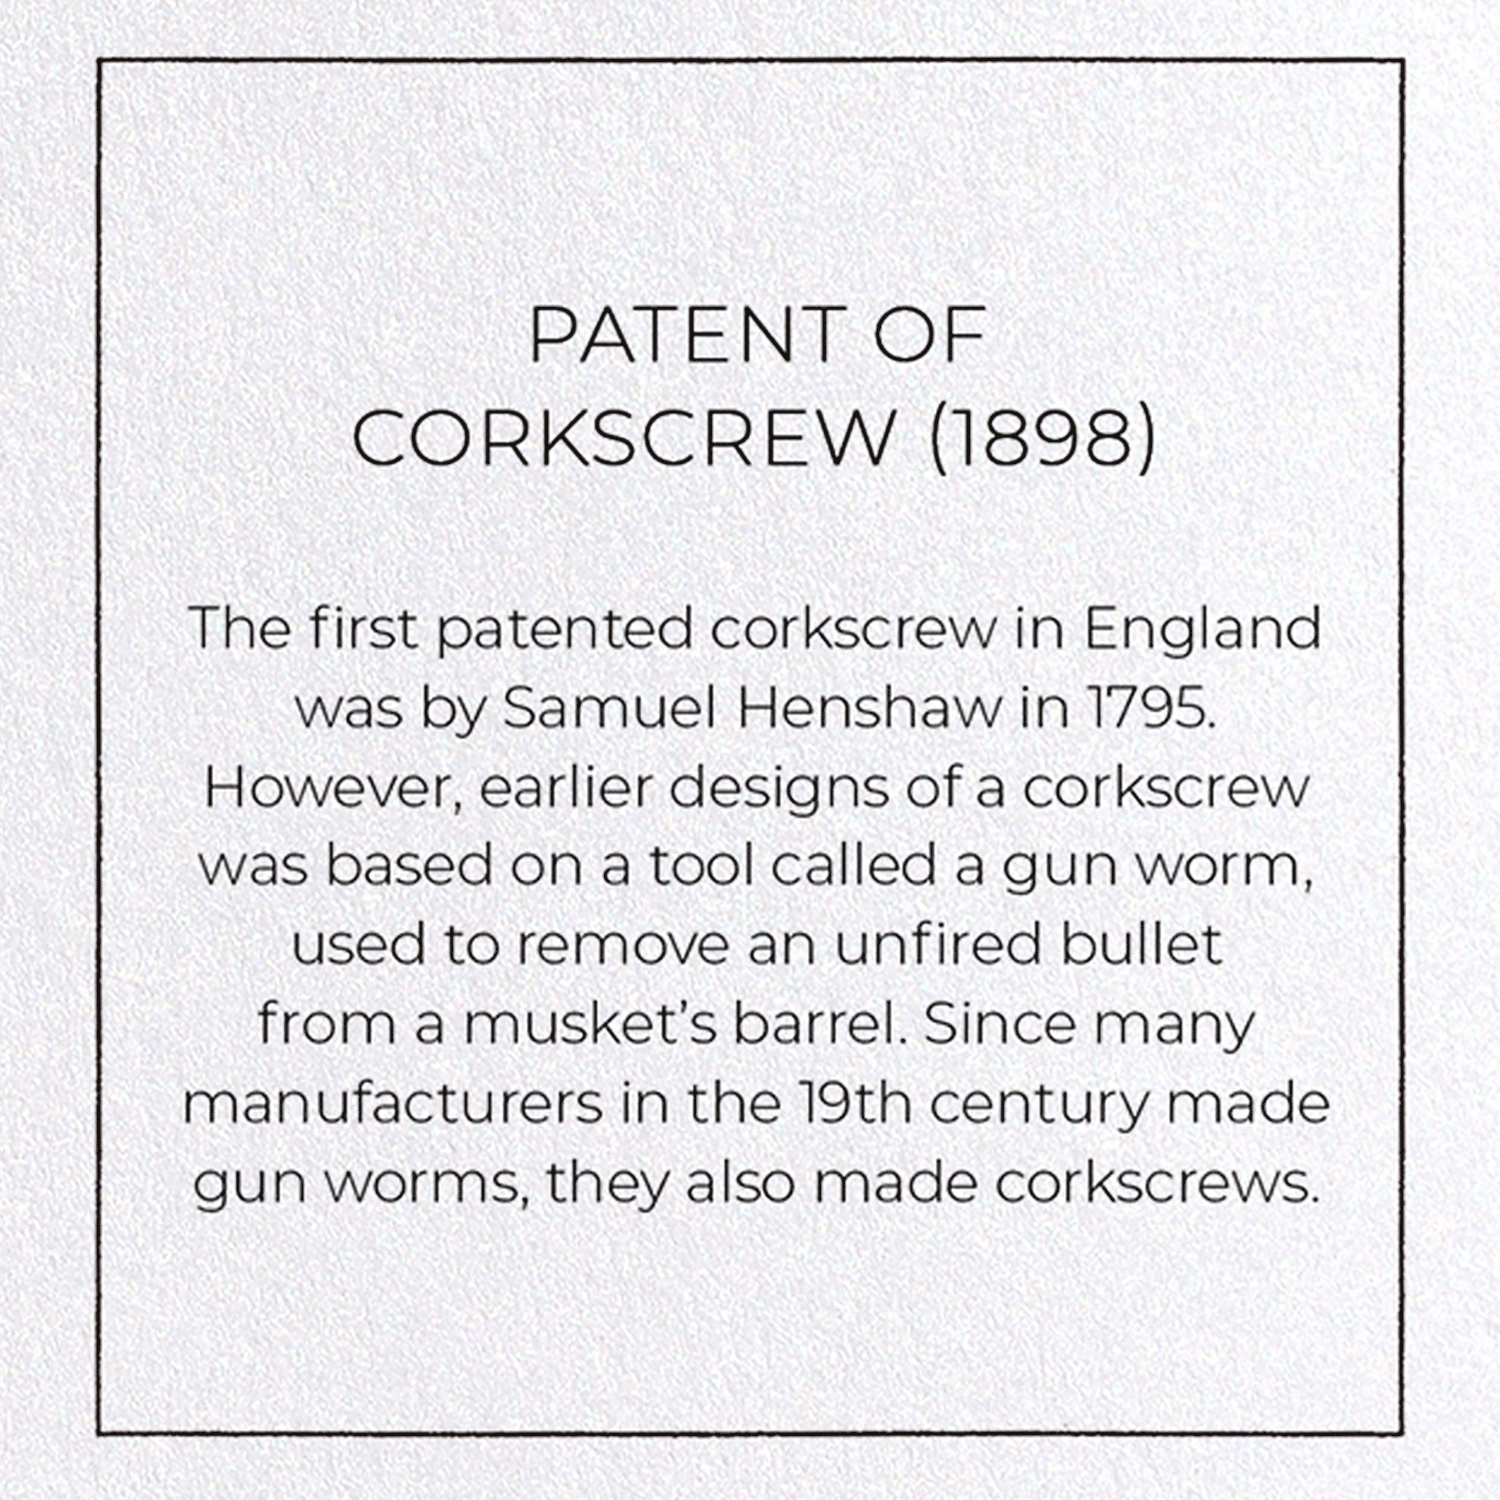 PATENT OF CORKSCREW (1898)